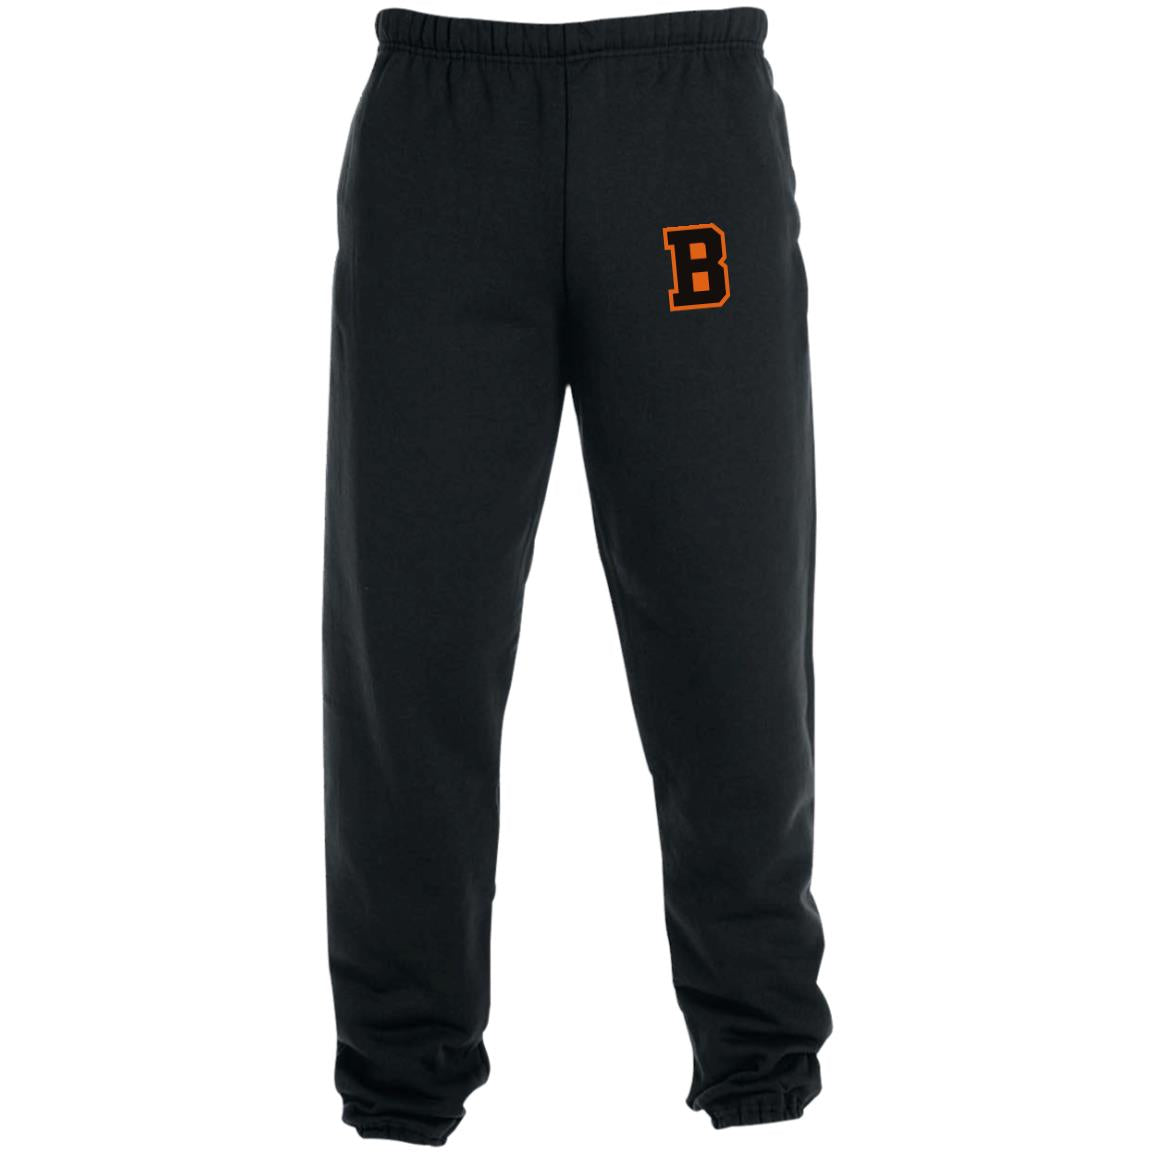 WBLHSB B Sweatpants with Pockets